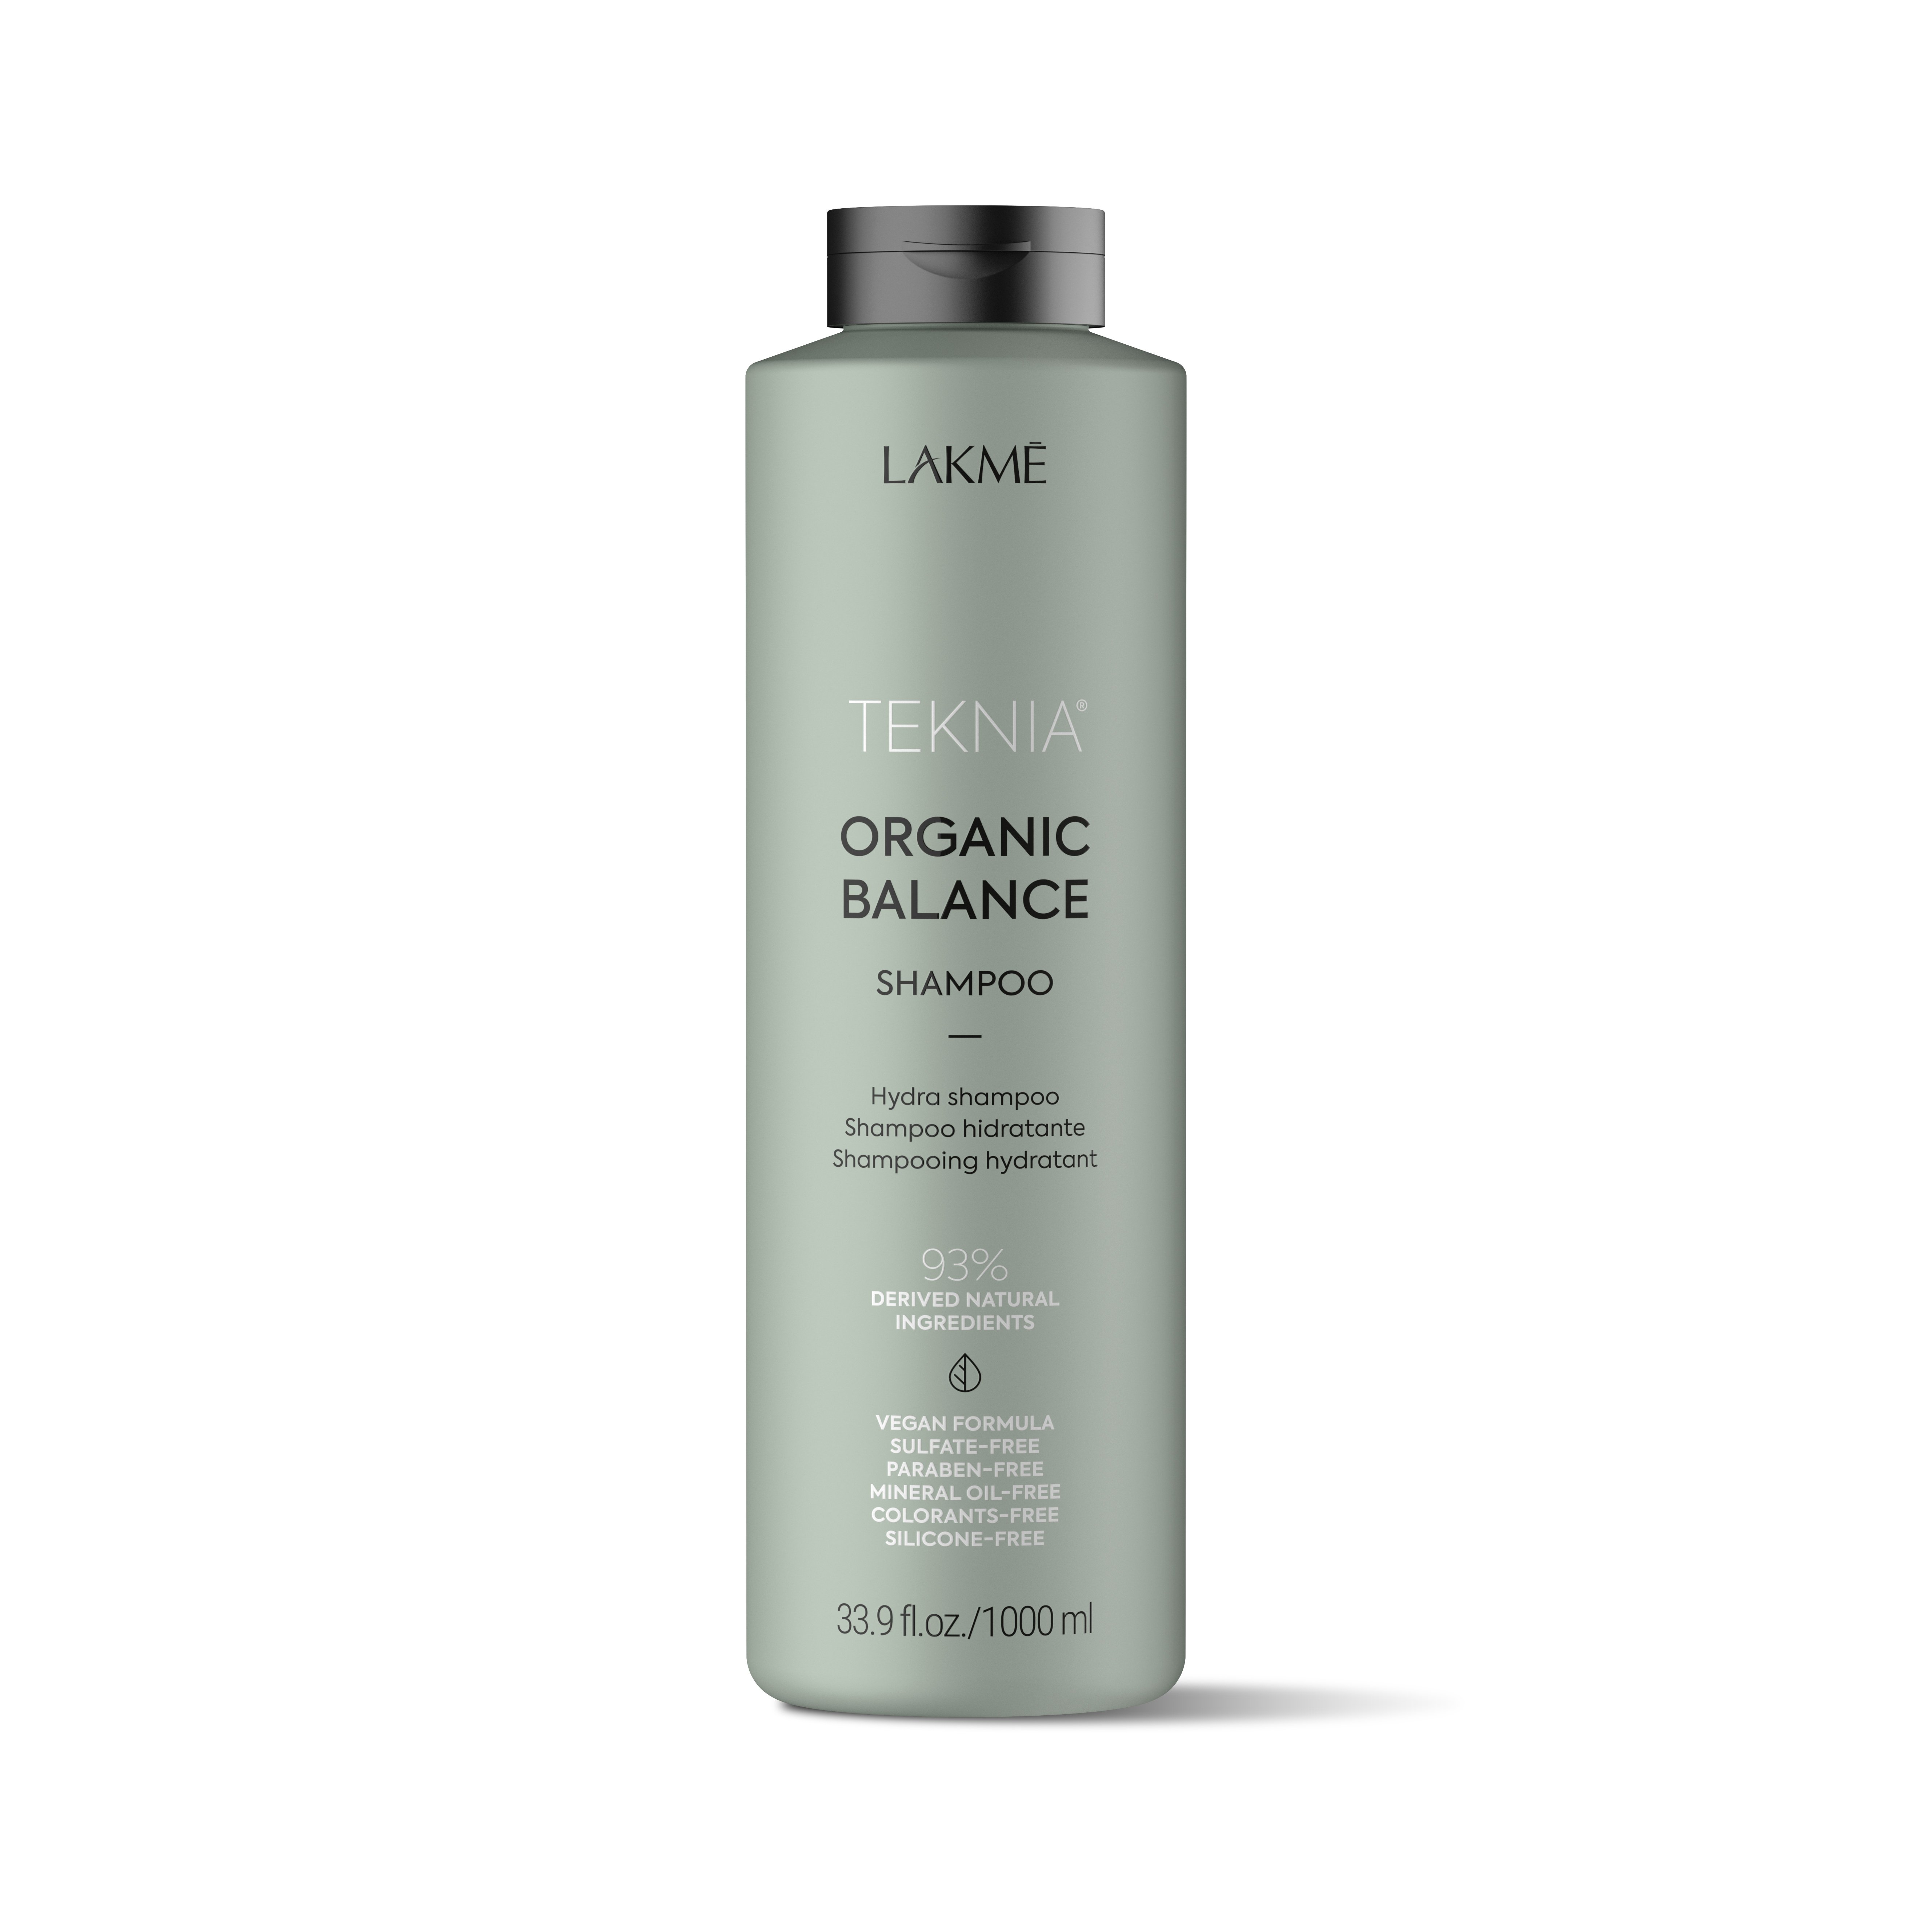 Lakmé - Teknia Organic Balance Shampoo 1000 ml - Skjønnhet